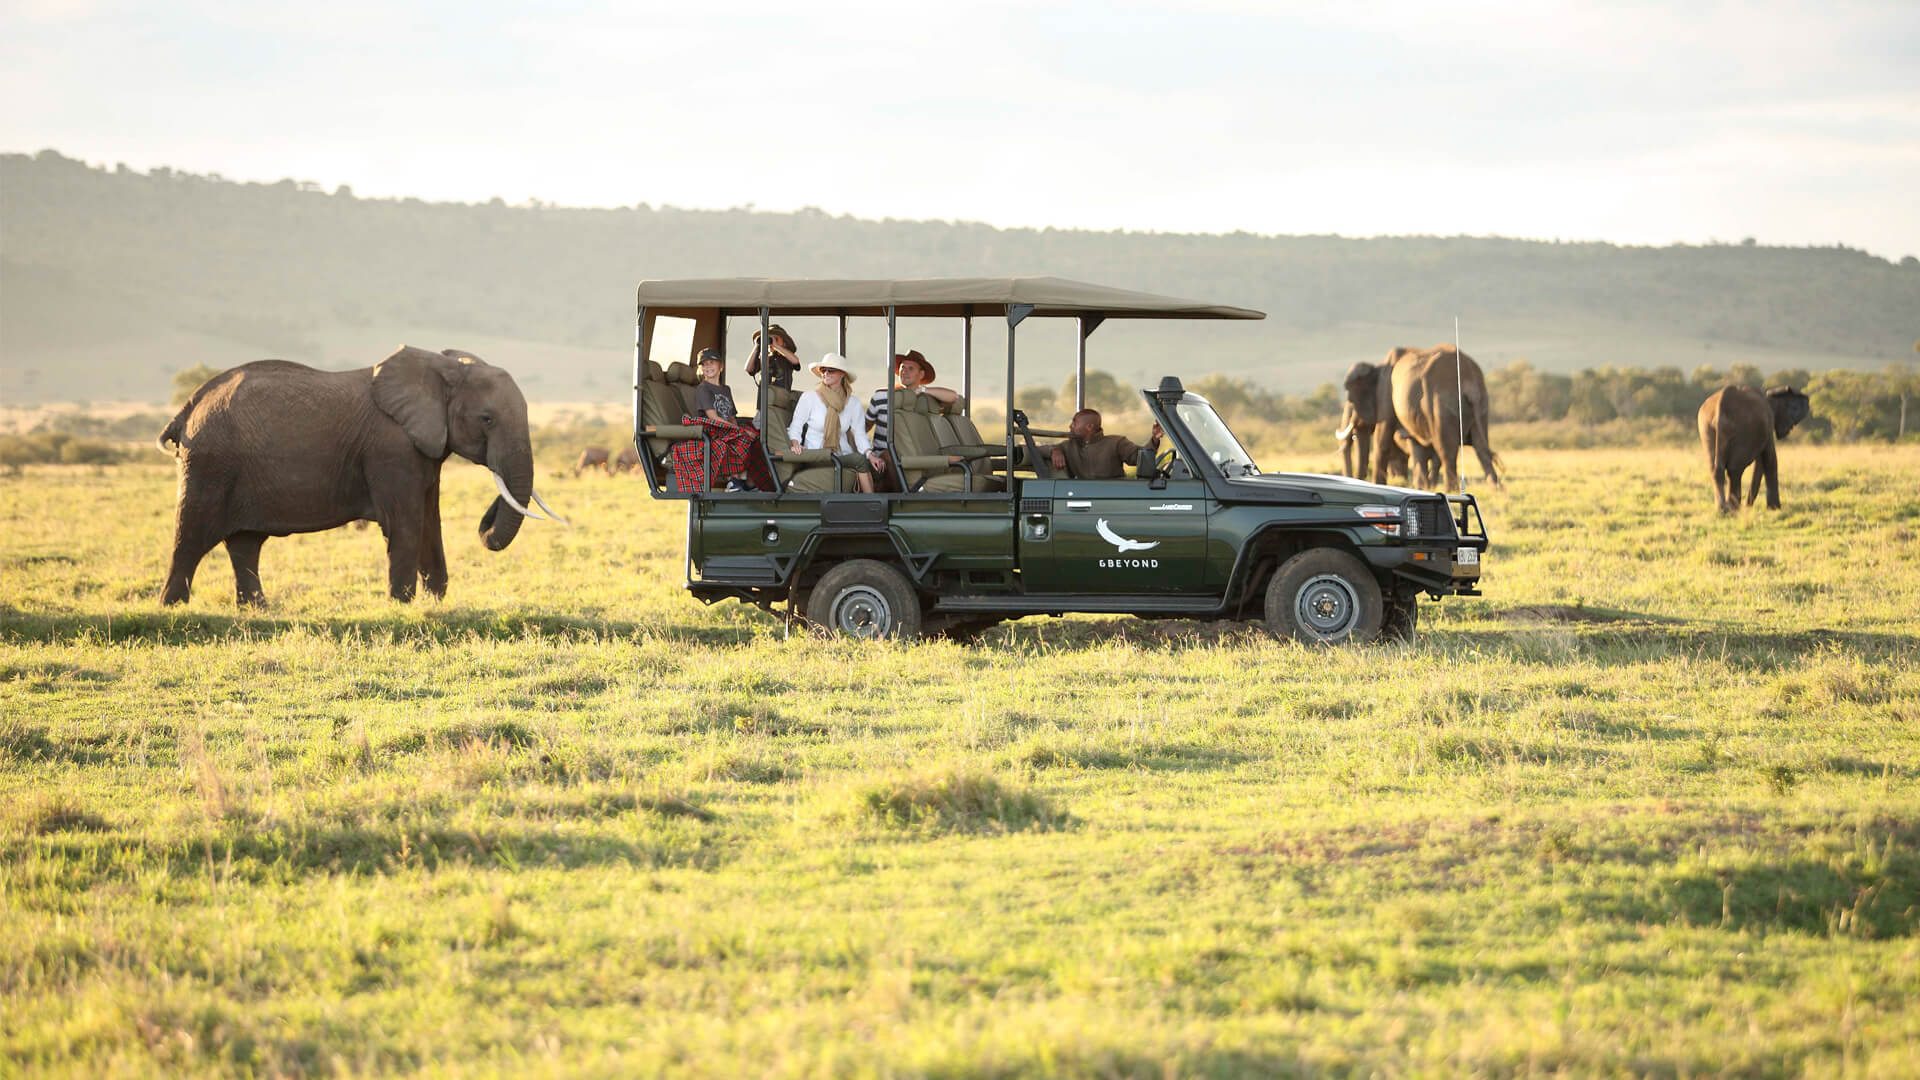 Getting to Maasai Mara National Reserve